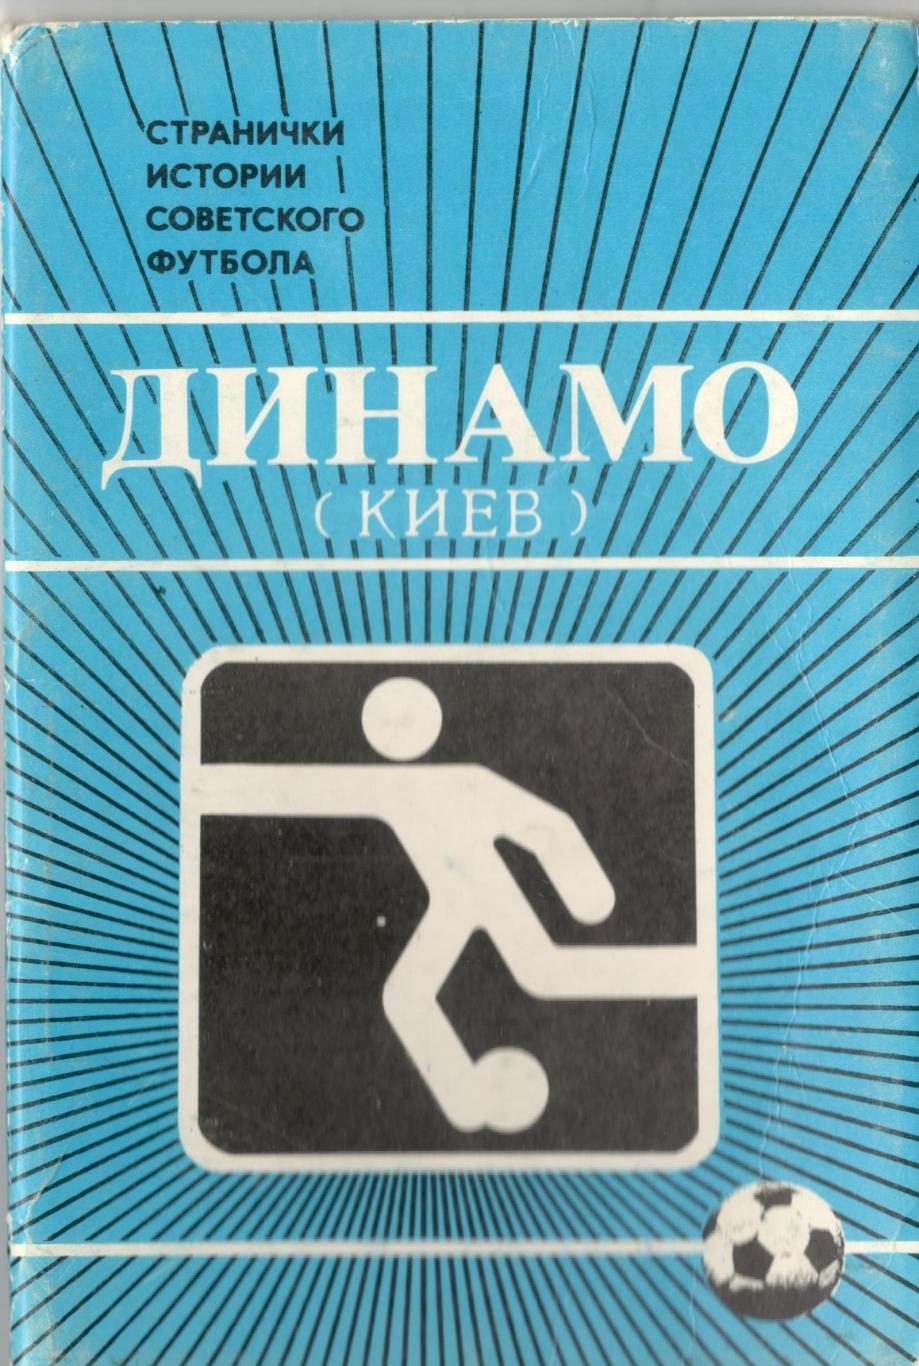 Набор открыток футбол «Динамо»Киев